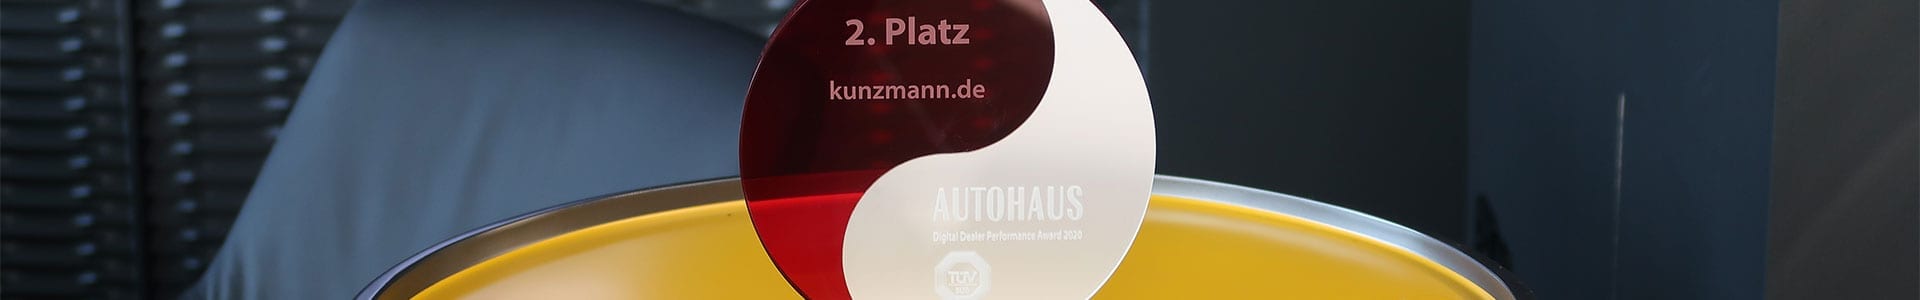 Digital Dealer Performance Award 2020